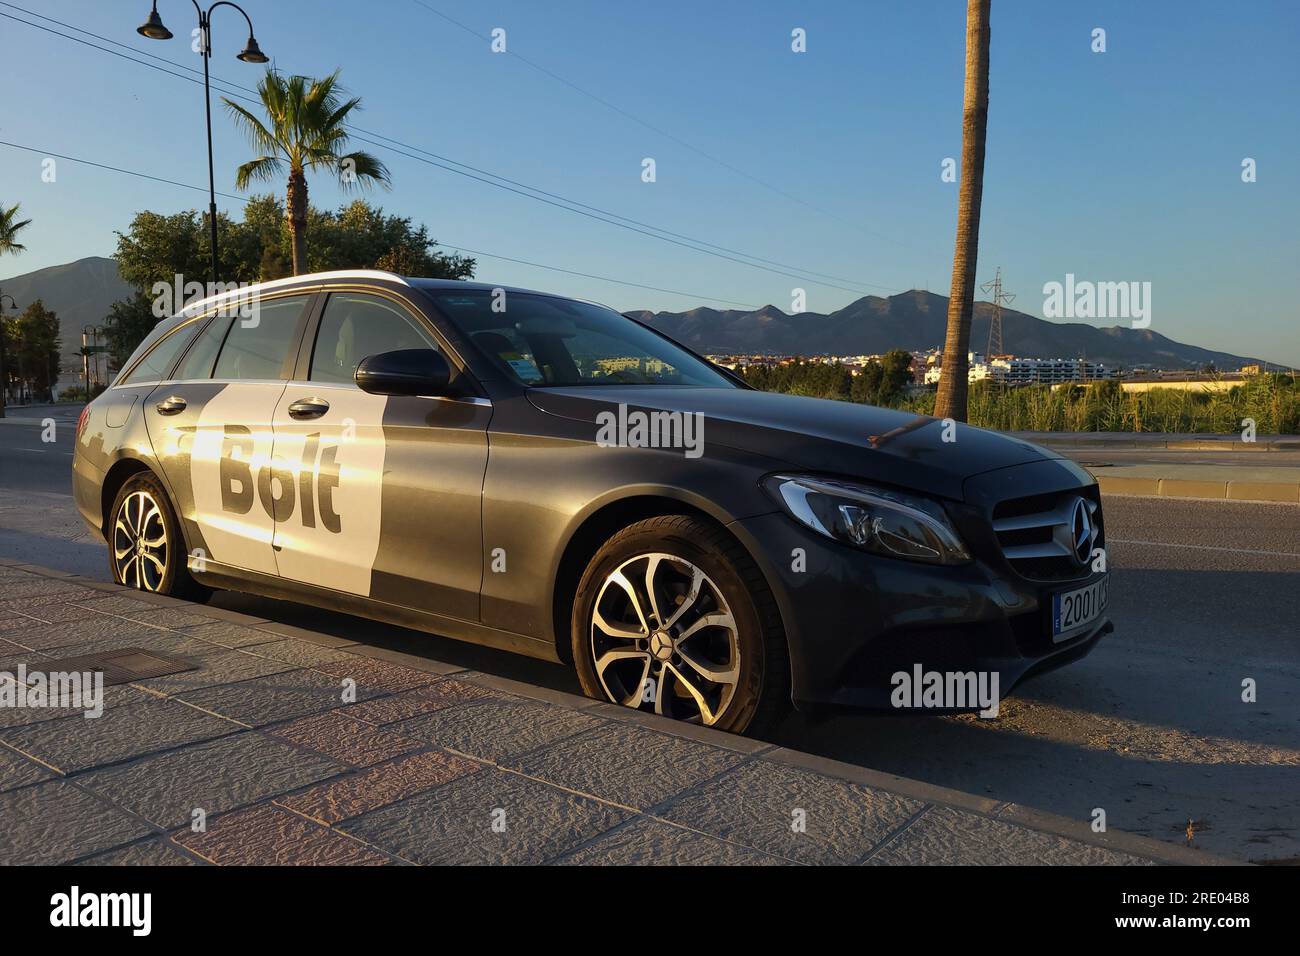 Taxi and mercedes fotografías e imágenes de alta resolución - Página 3 -  Alamy